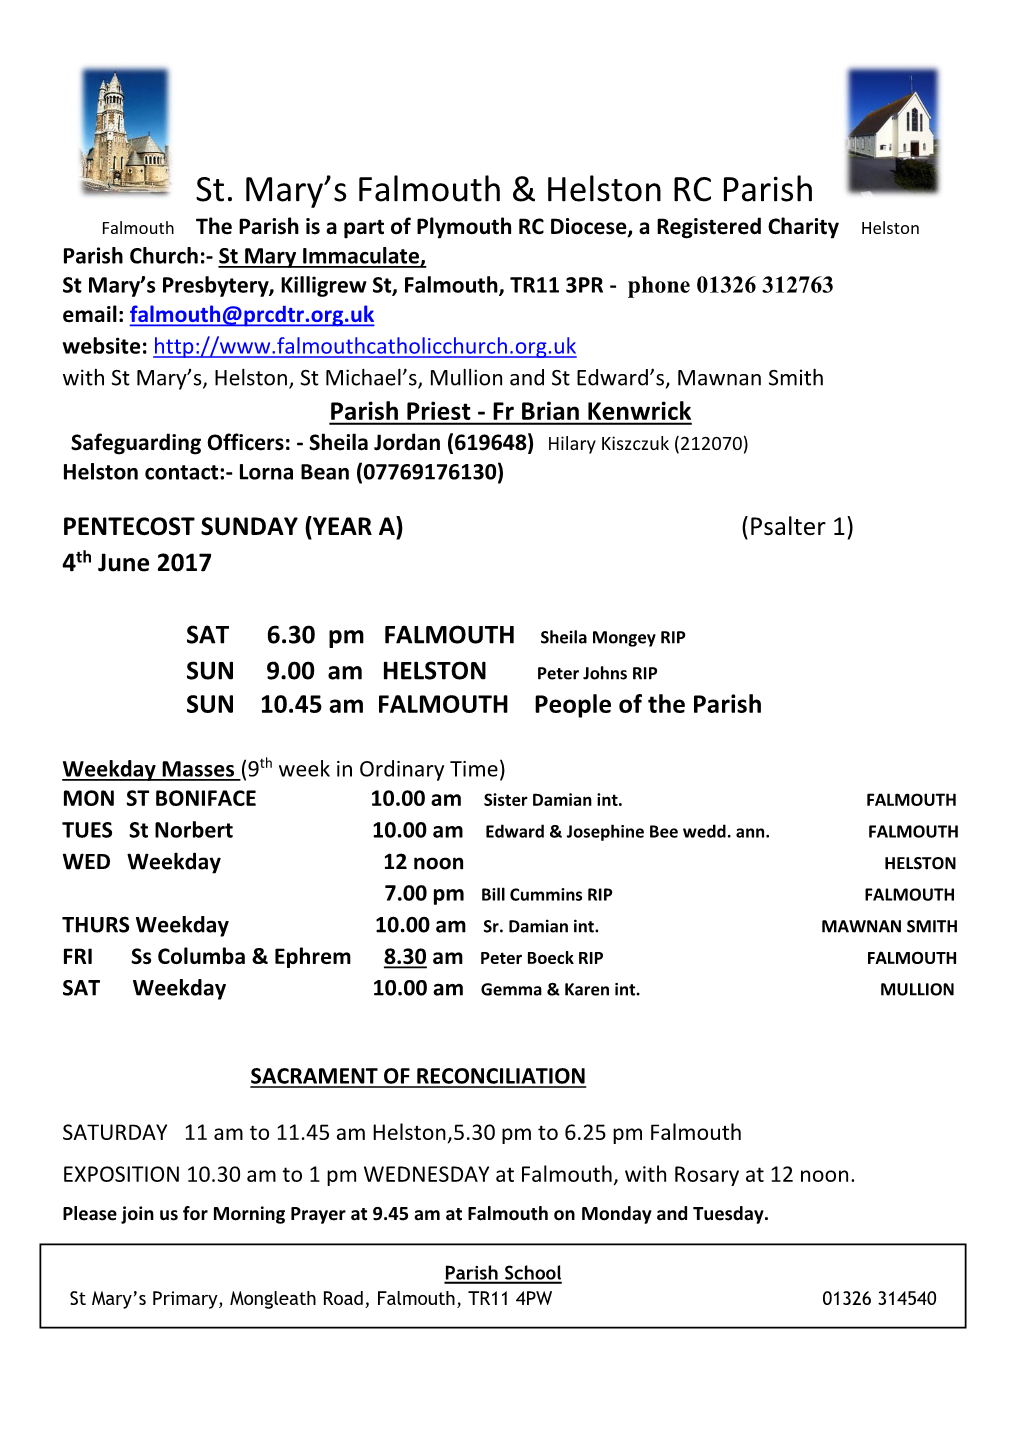 PENTECOST SUNDAY (YEAR A) (Psalter 1) 4Th June 2017